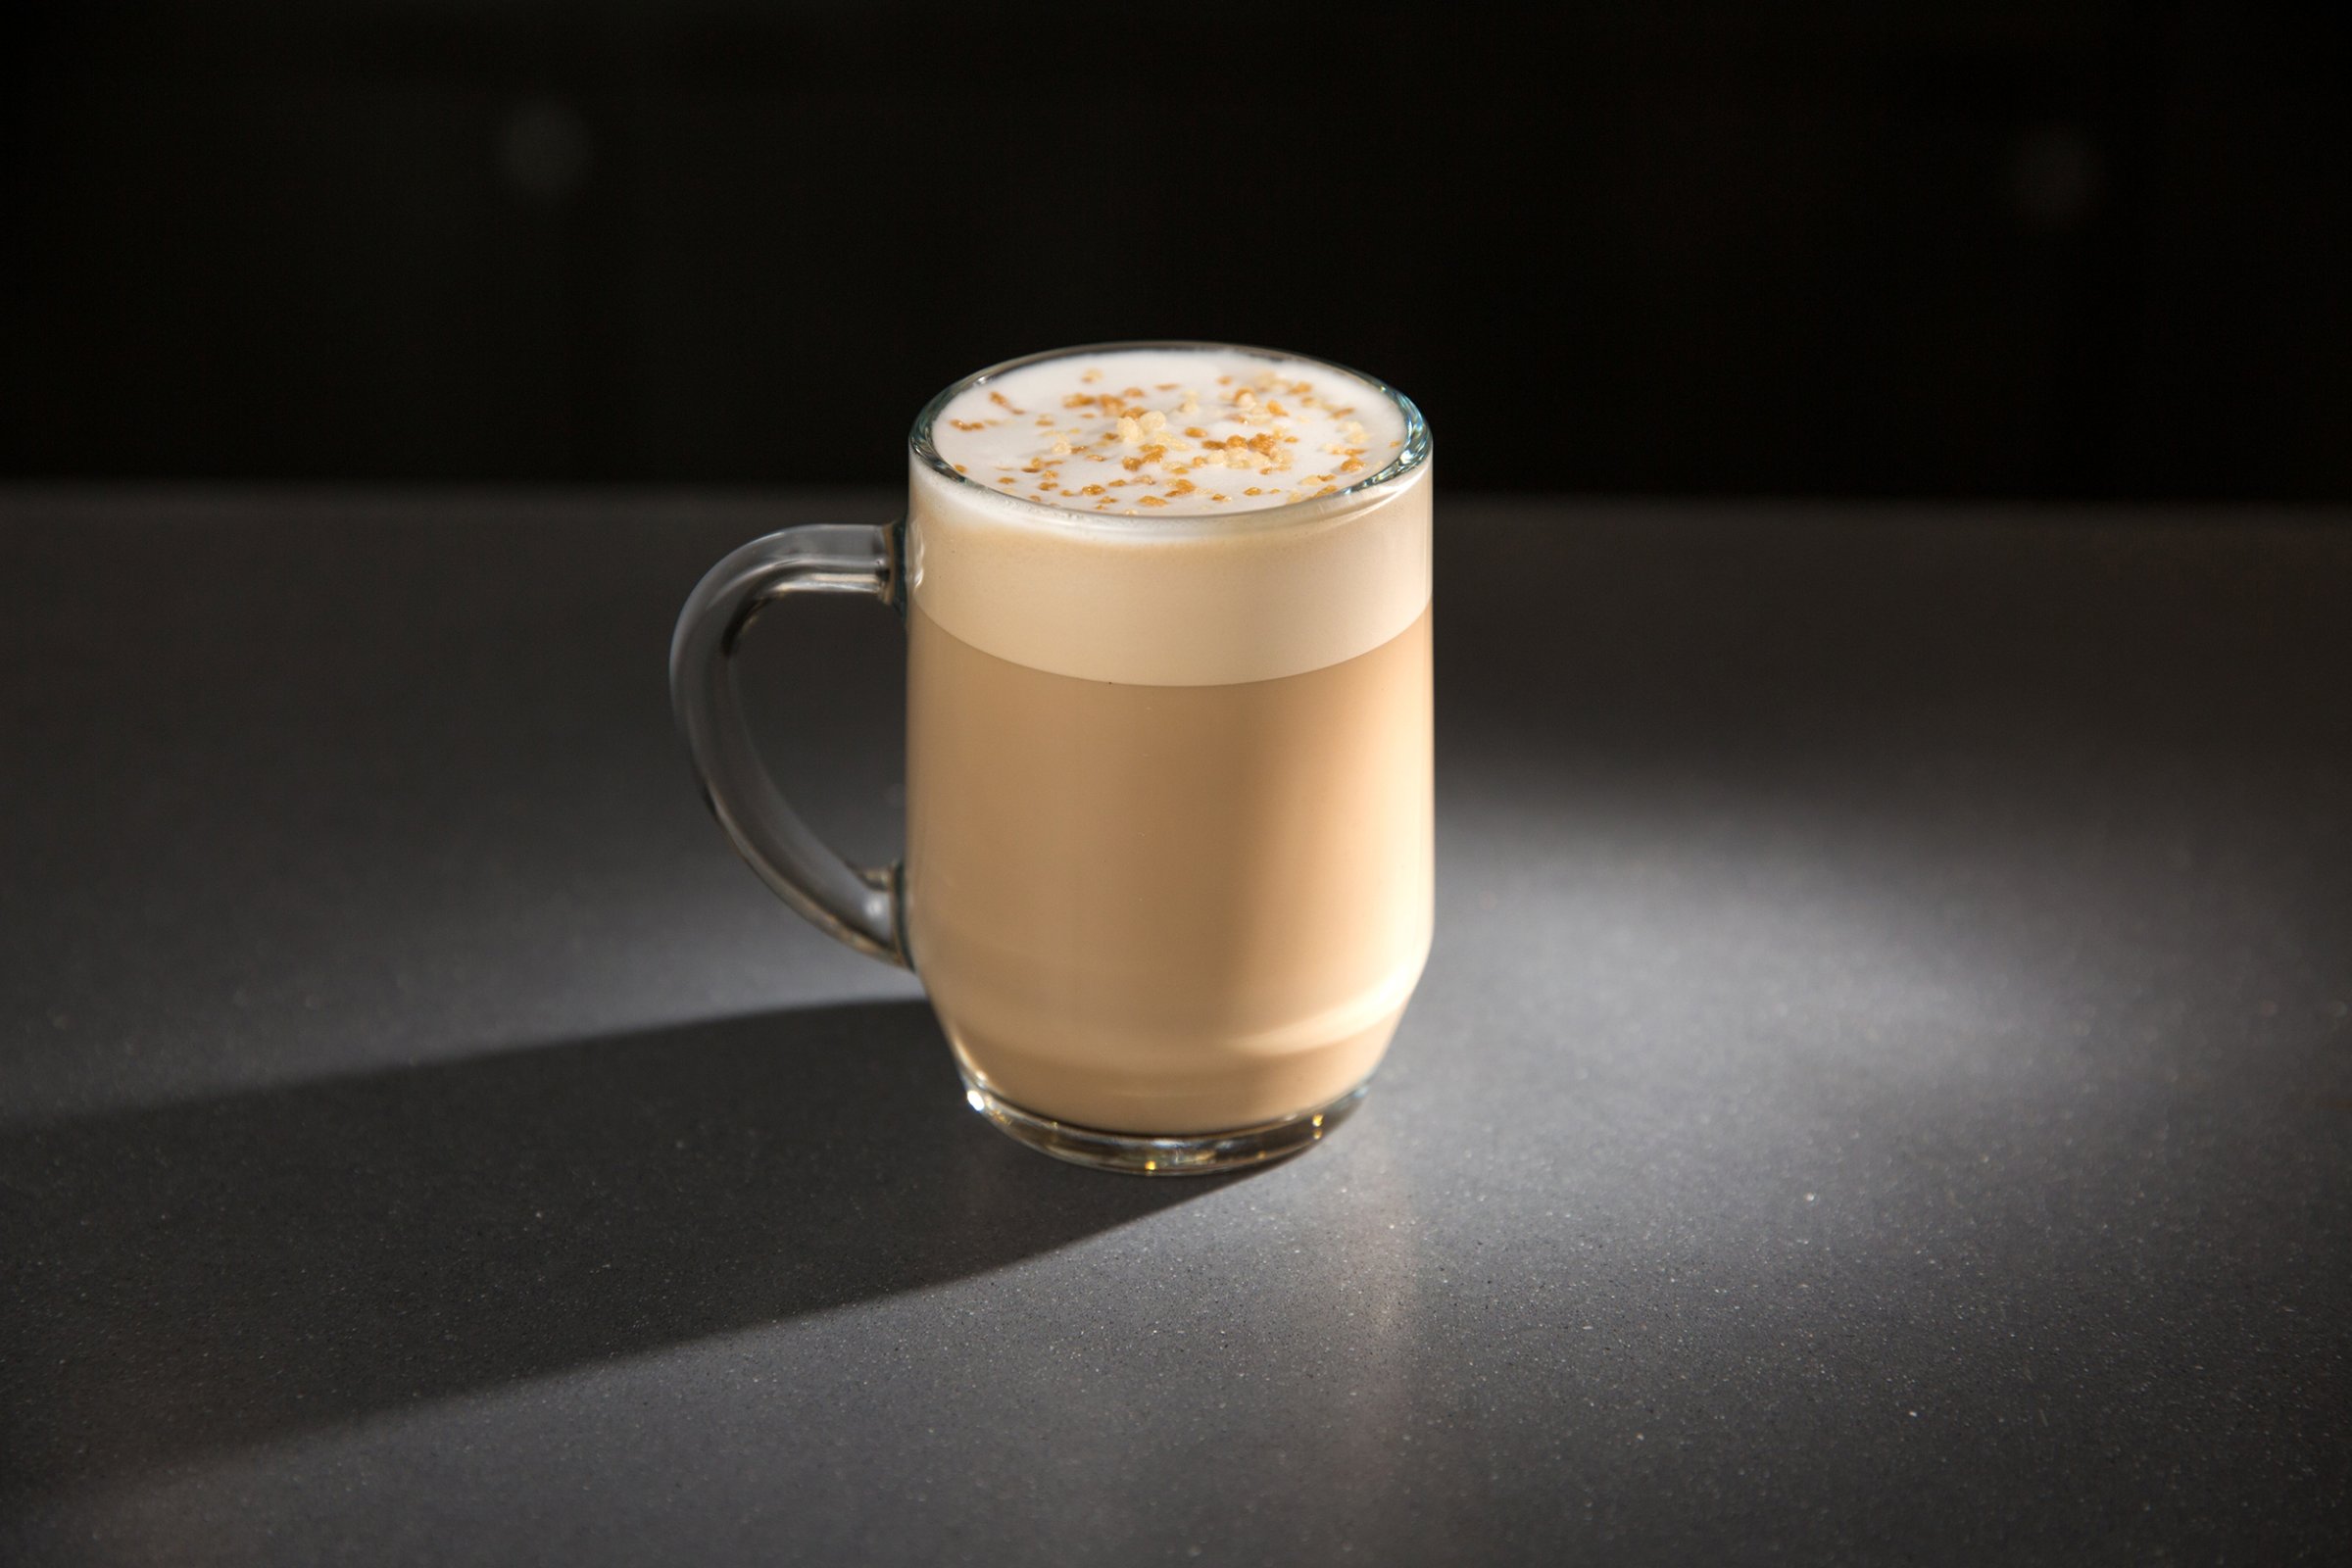 Starbucks Caramelized Honey Latte photographed on March 17, 2016.